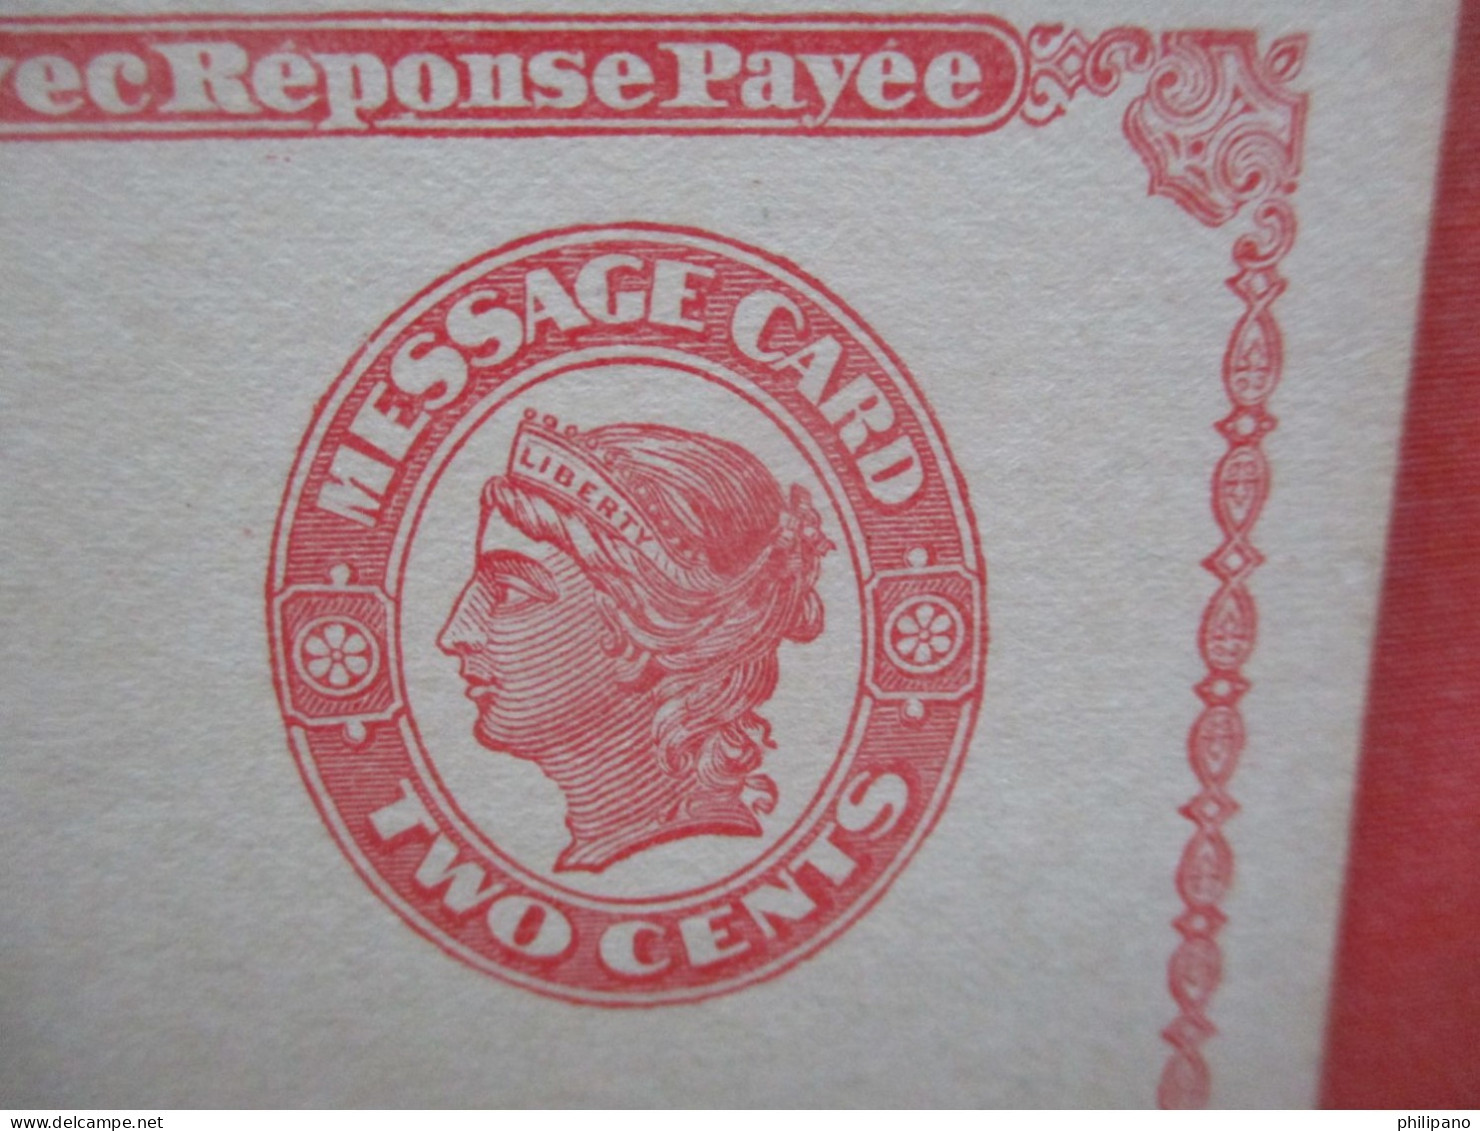 USPS Scott UY11 2c Red On Cream Liberty Head G (Good) Postal Reply Card   Ref 5978 - - Souvenirkarten